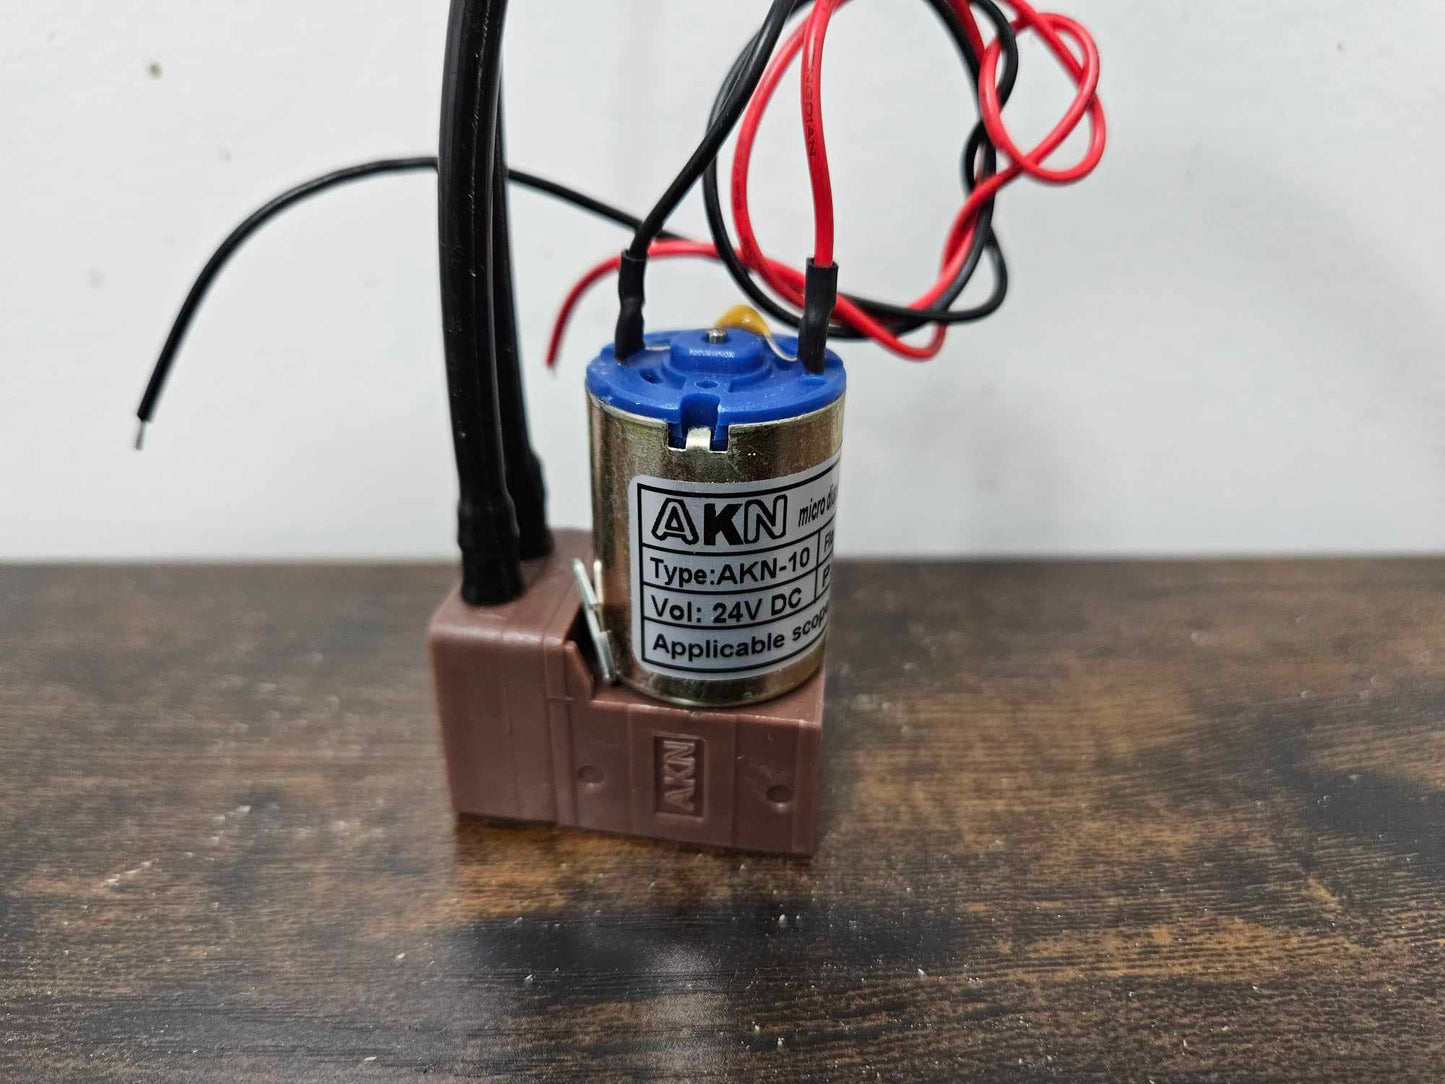 akn-10 micro diaphragm vacuum pump inkpump for priming ink